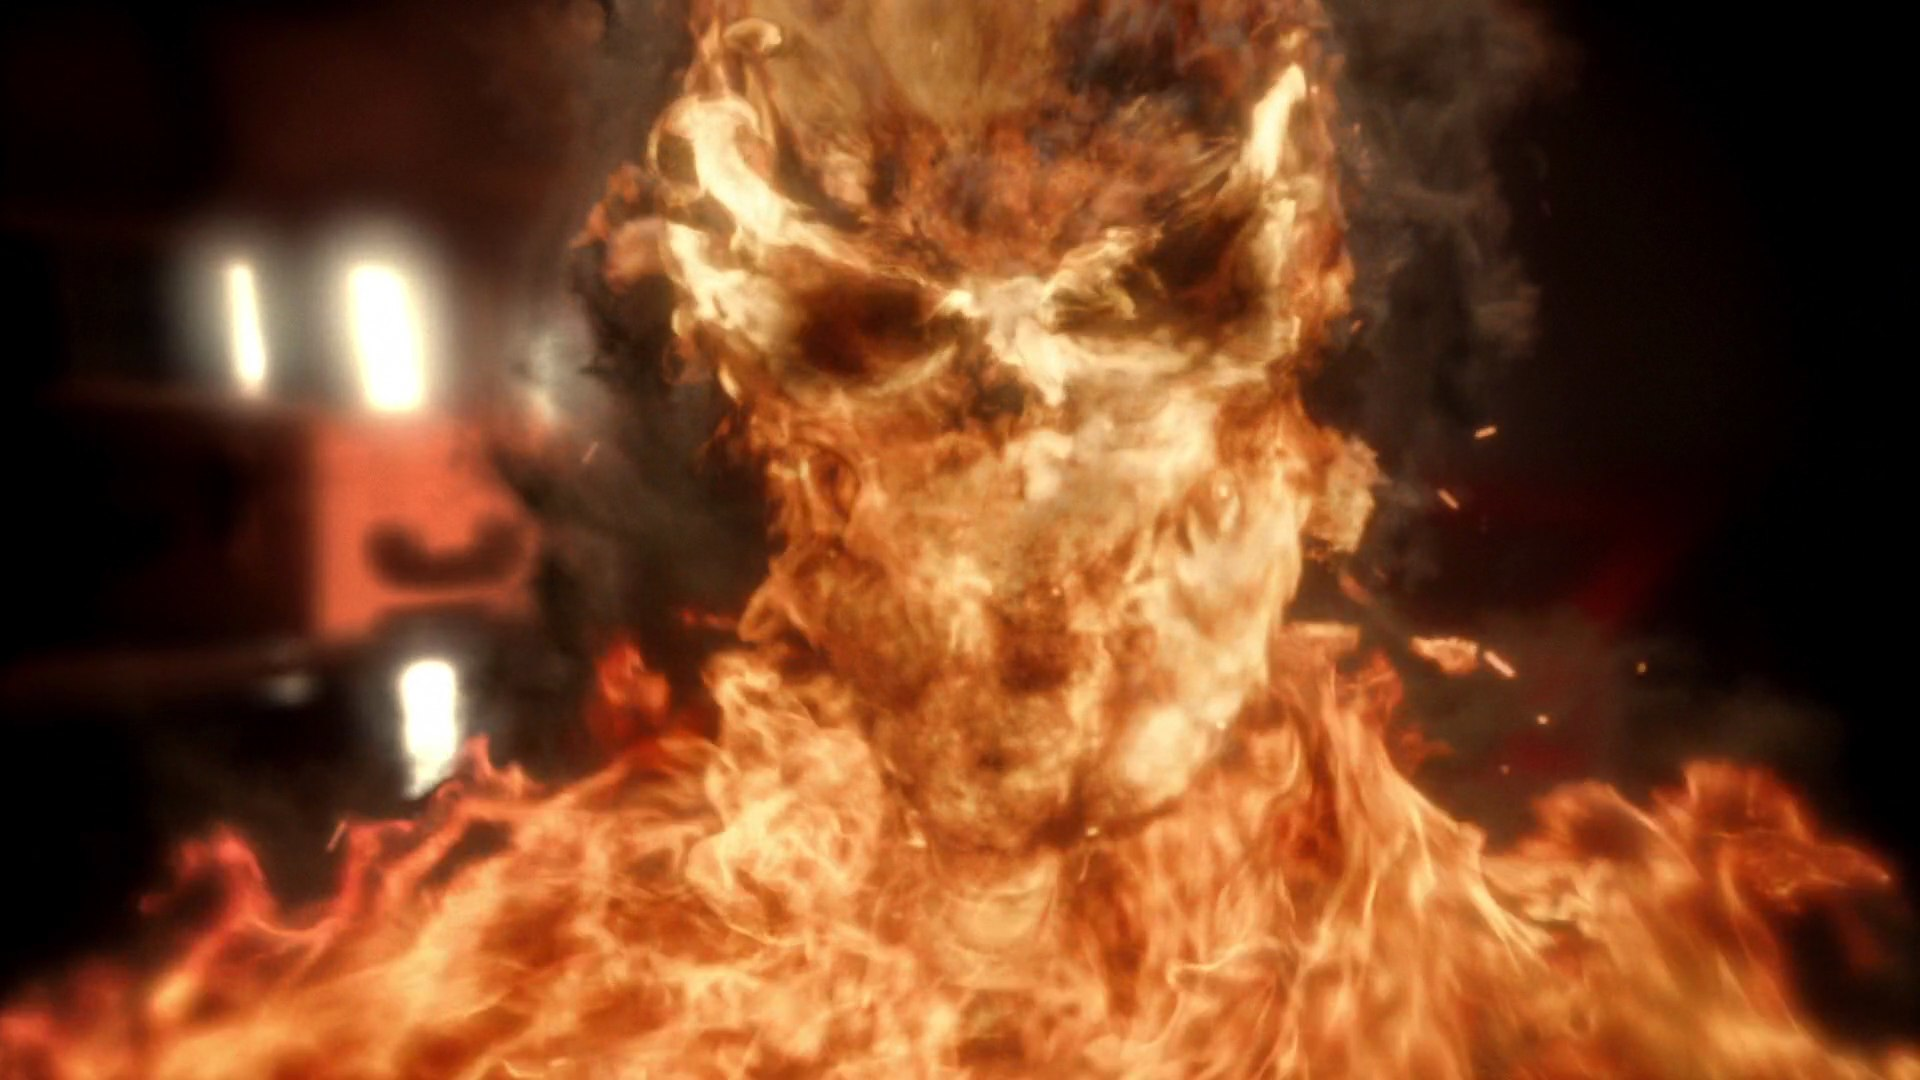 Ghost Rider: Spirit of Vengeance - Wikipedia